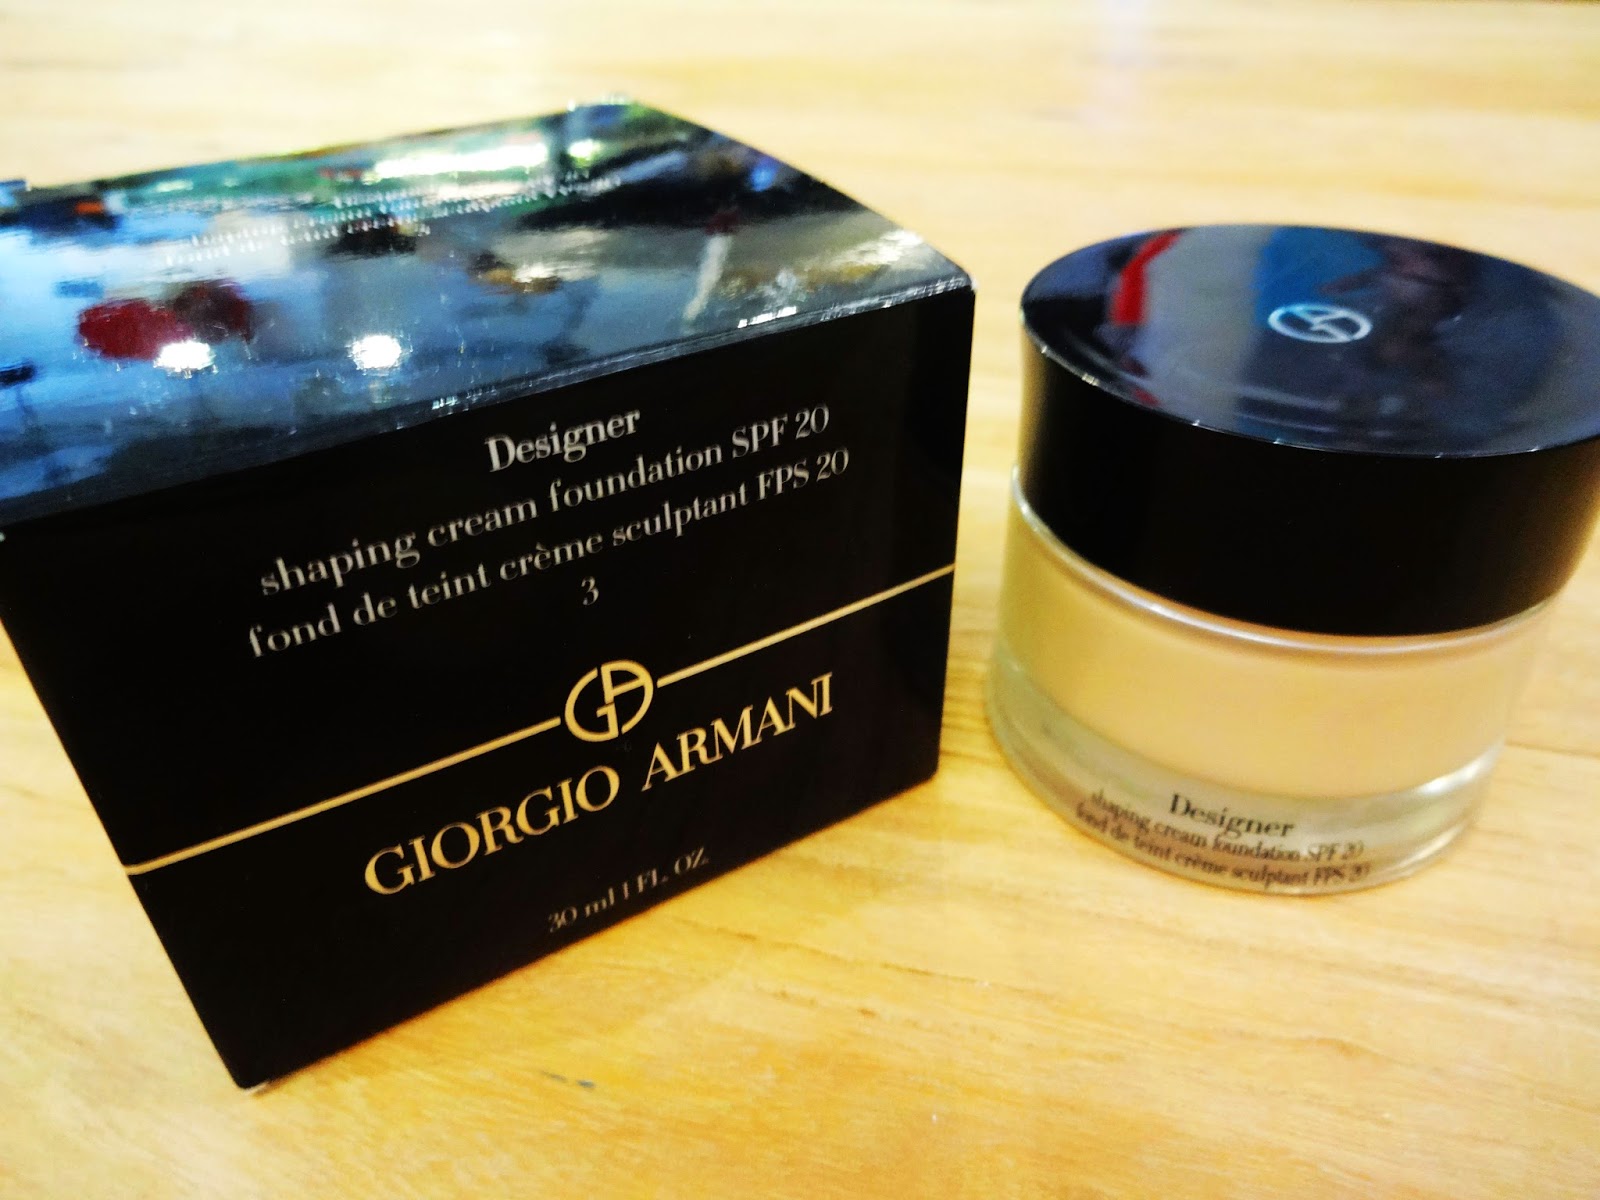 armani designer shaping cream foundation